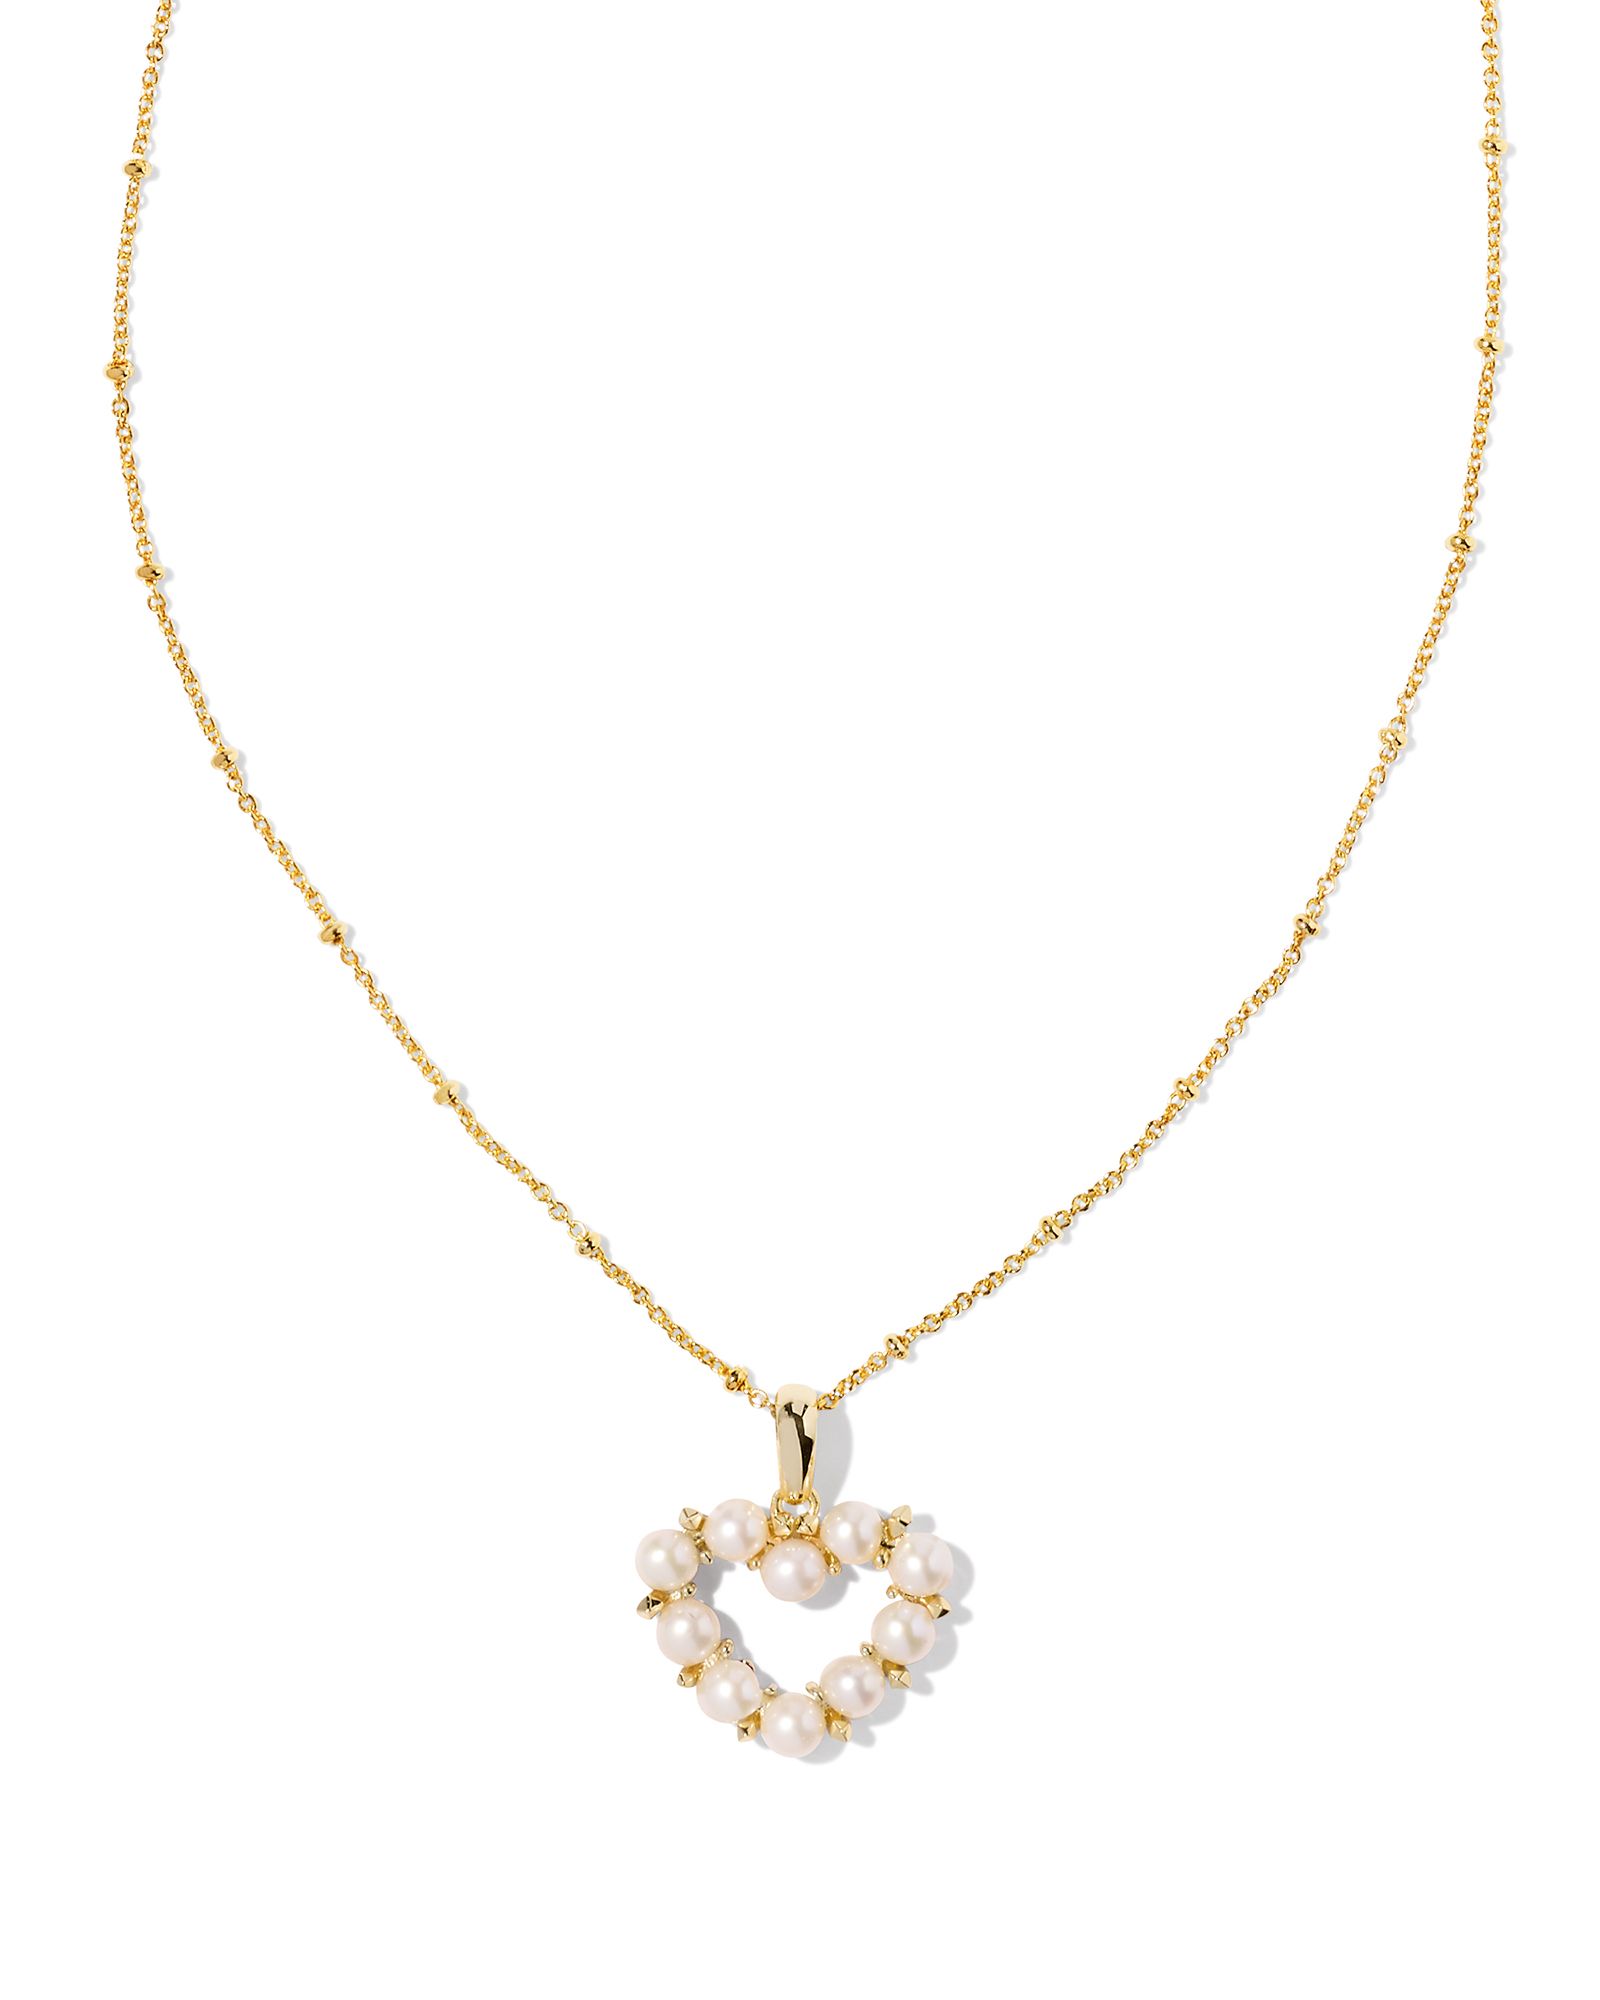 Ashton Gold Heart Short Pendant Necklace in White Pearl | Kendra Scott | Kendra Scott